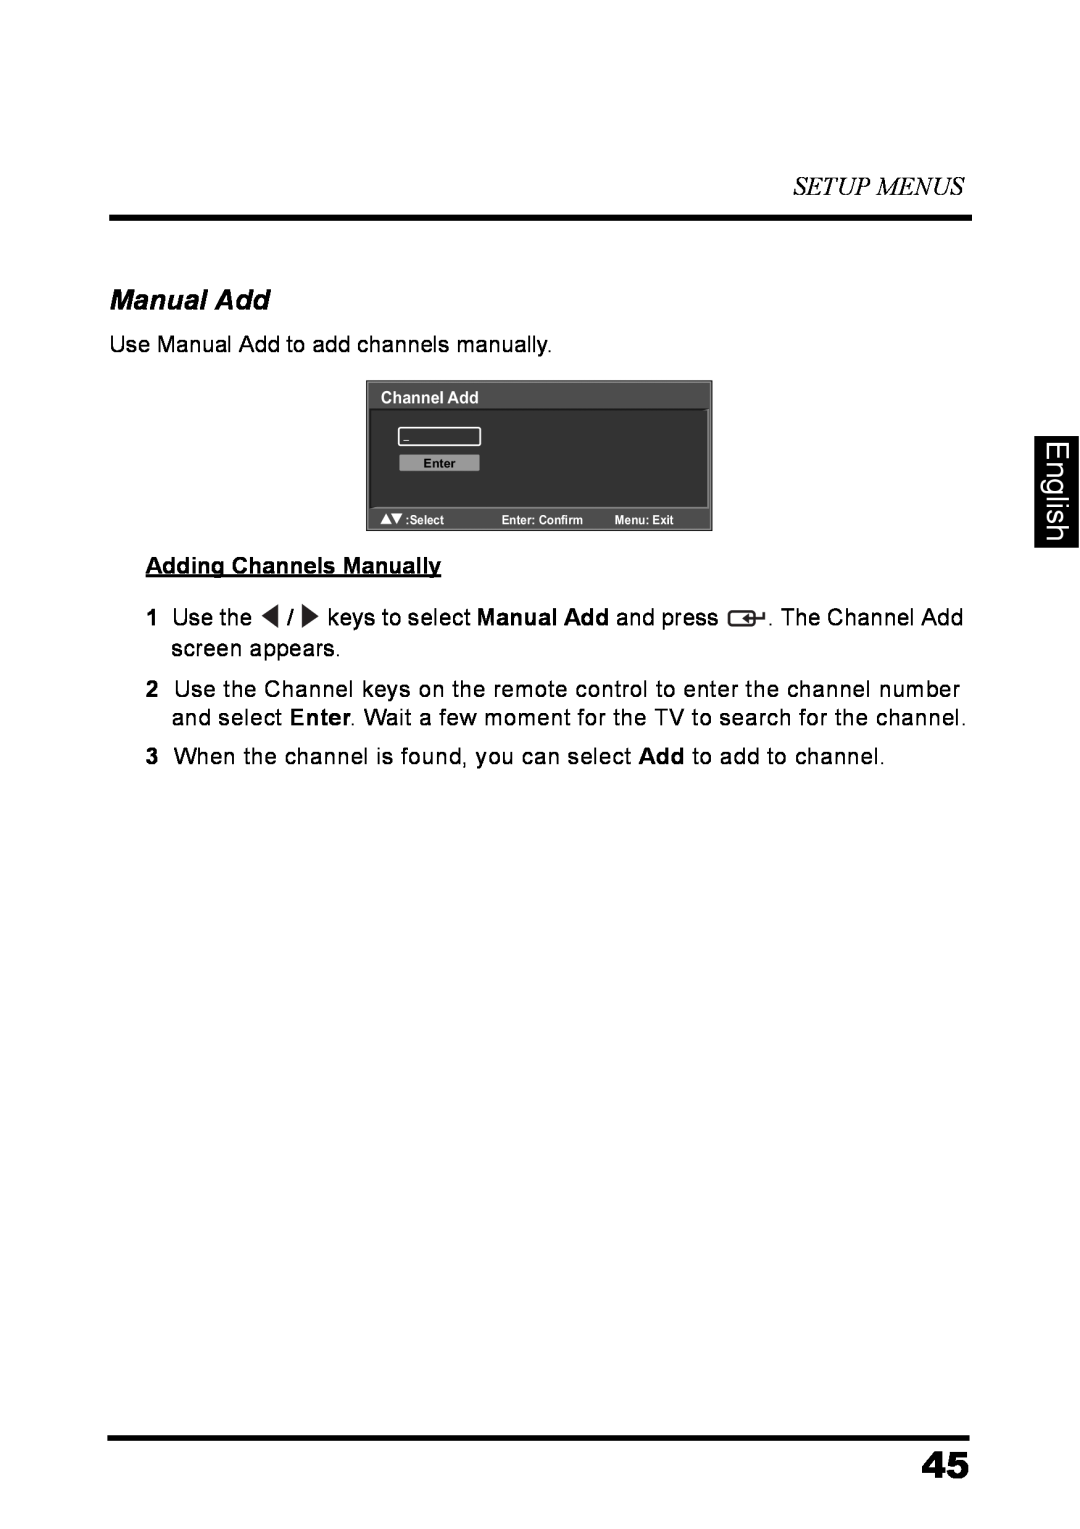 Westinghouse LD-3237 user manual Manual Add, English, Setup Menus, Adding Channels Manually 